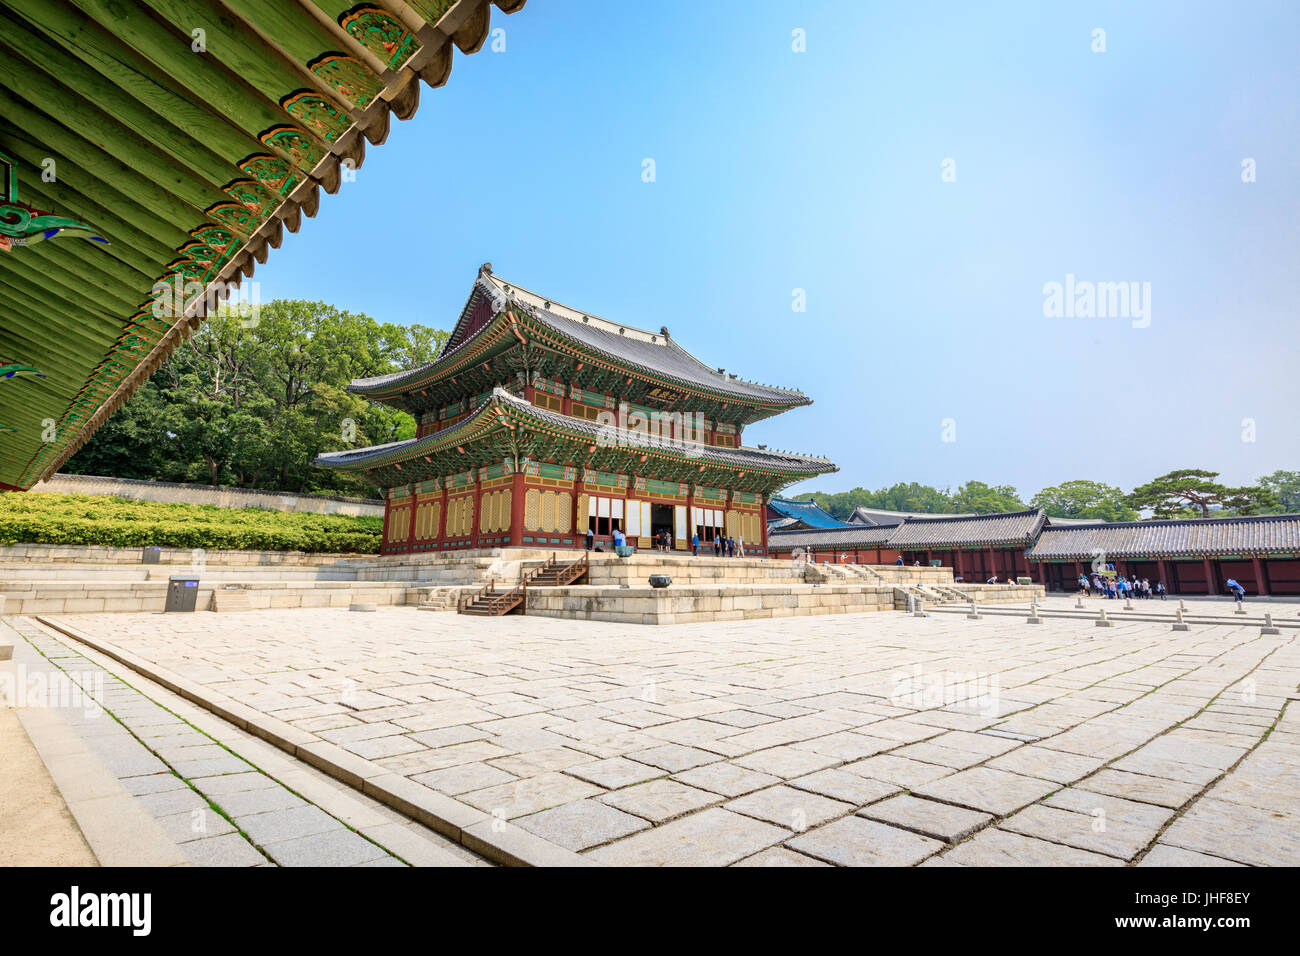 Changdeokgung Palace on Jun 17, 2017 in Seoul city, South Korea- Tour Destination Stock Photo